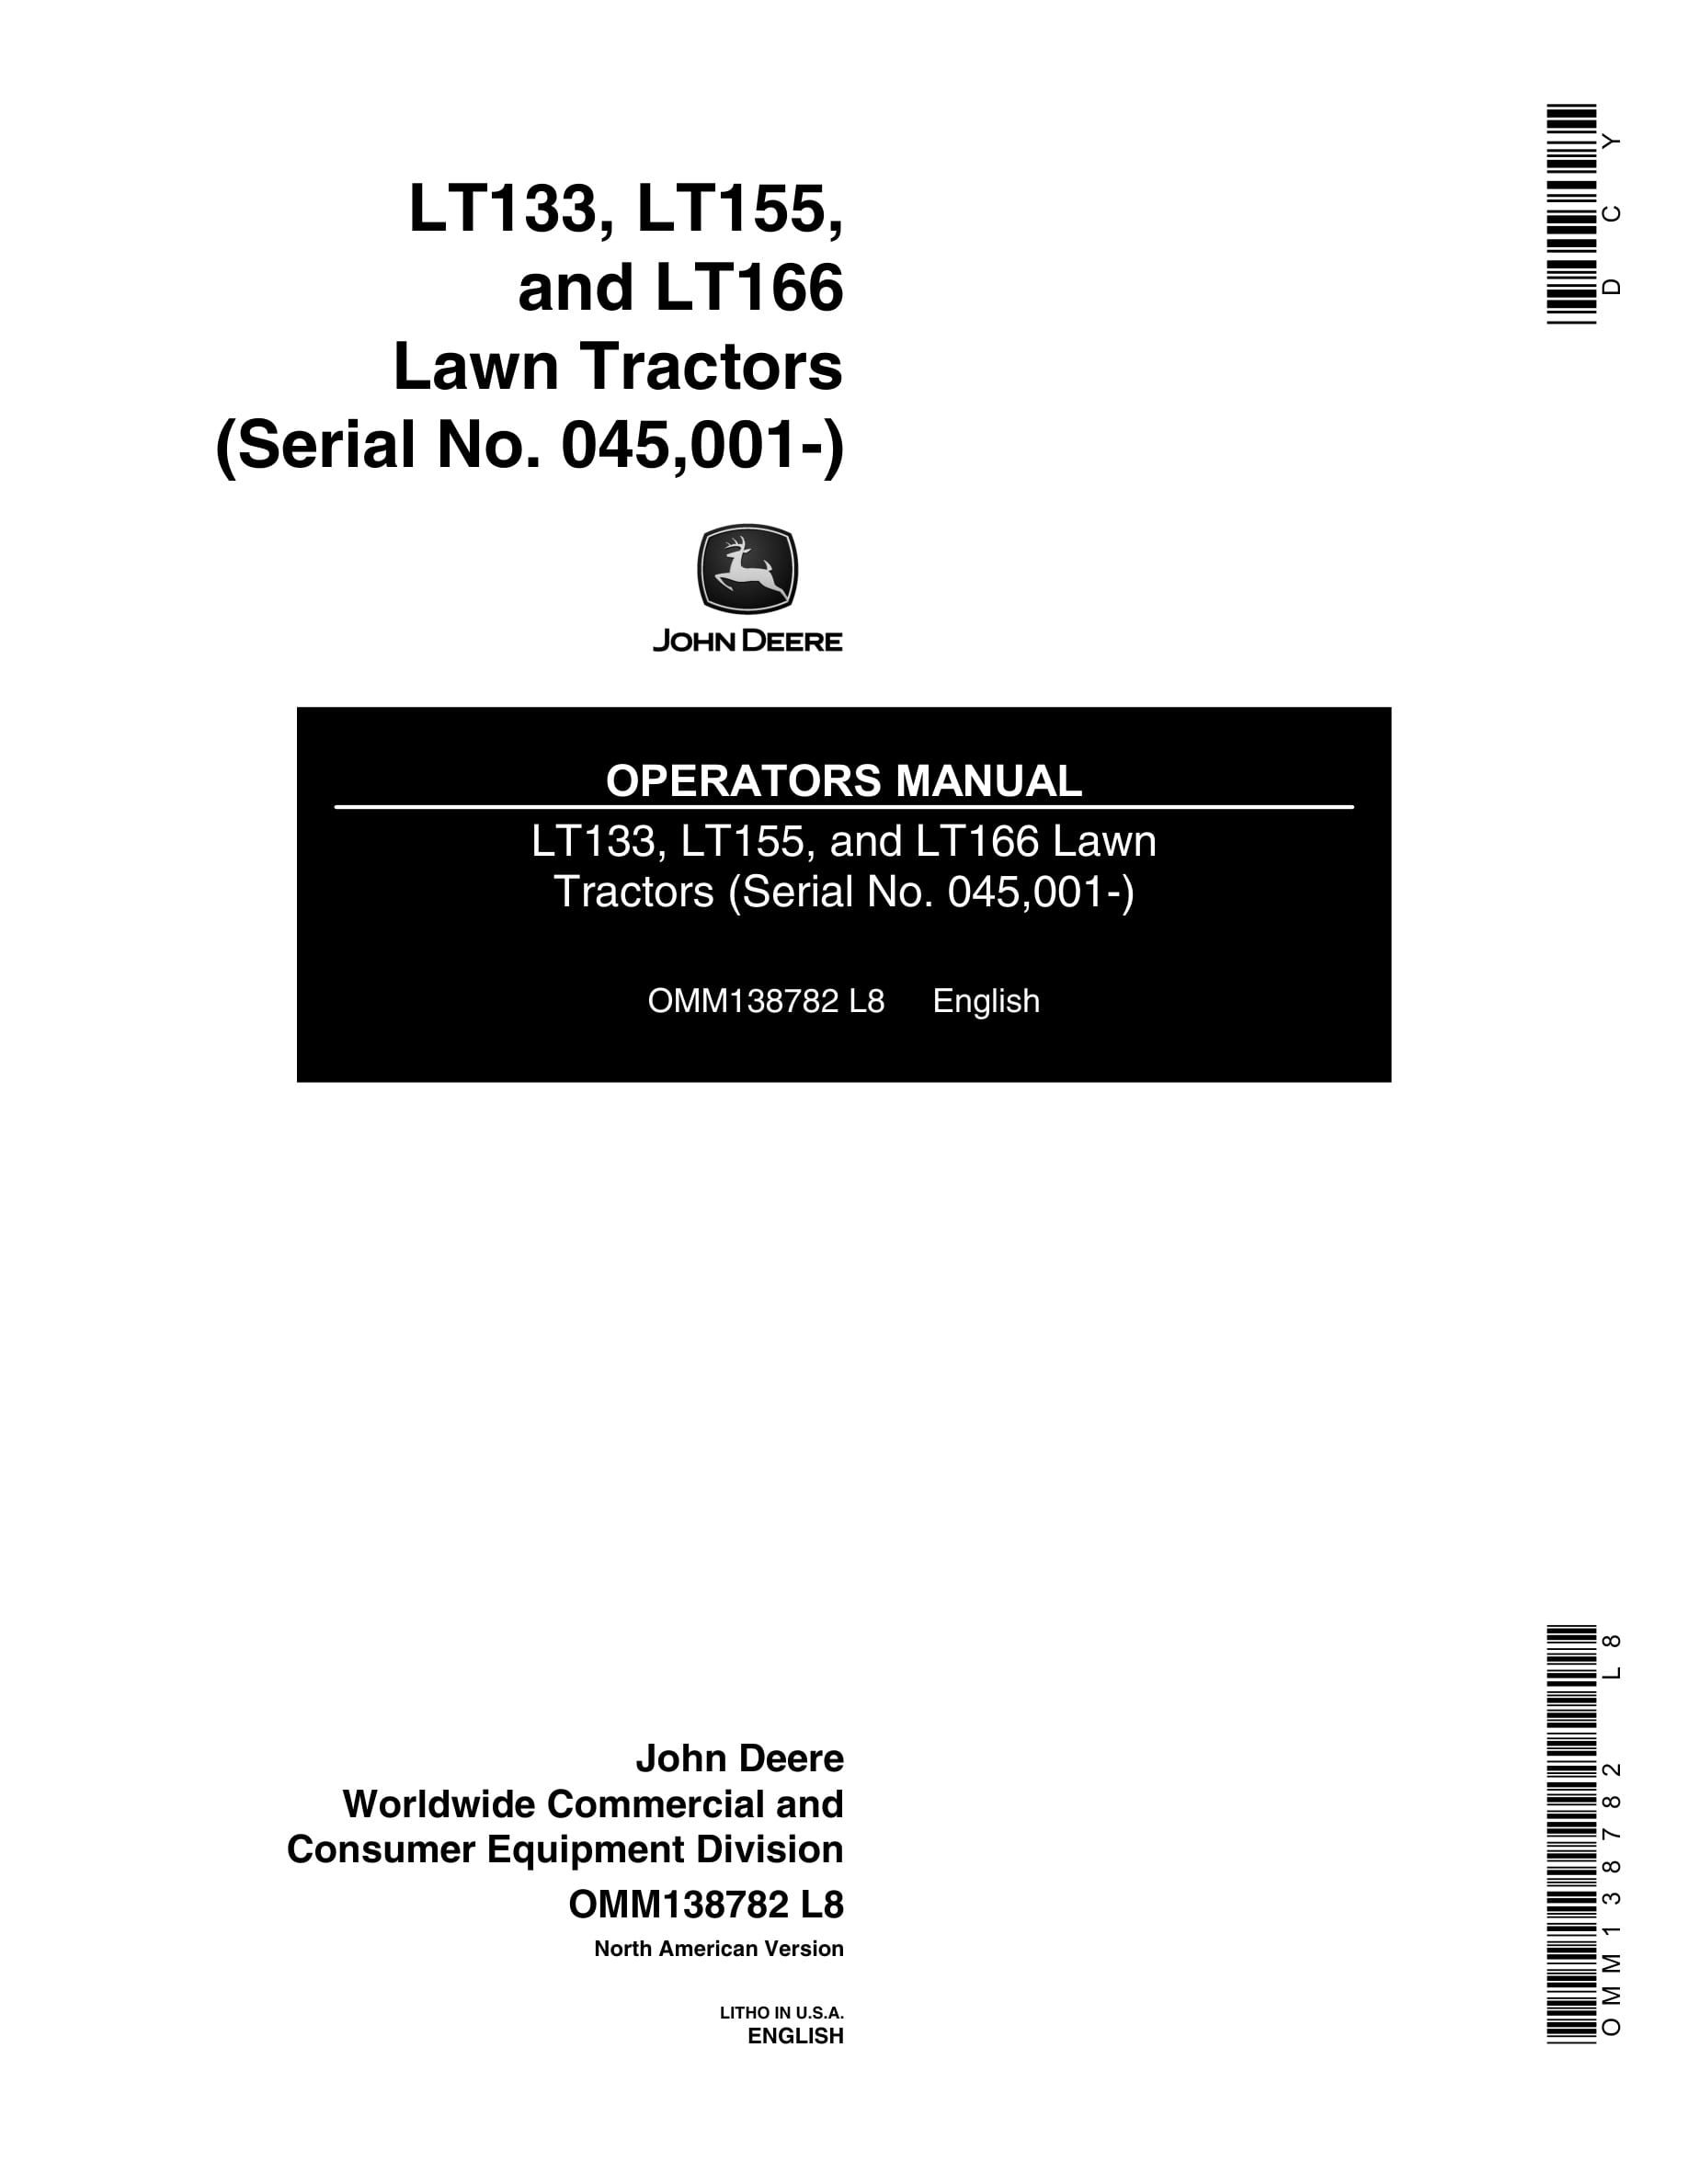 John Deere LT133, LT155, and LT166 Tractor Operator Manual OMM138782-1